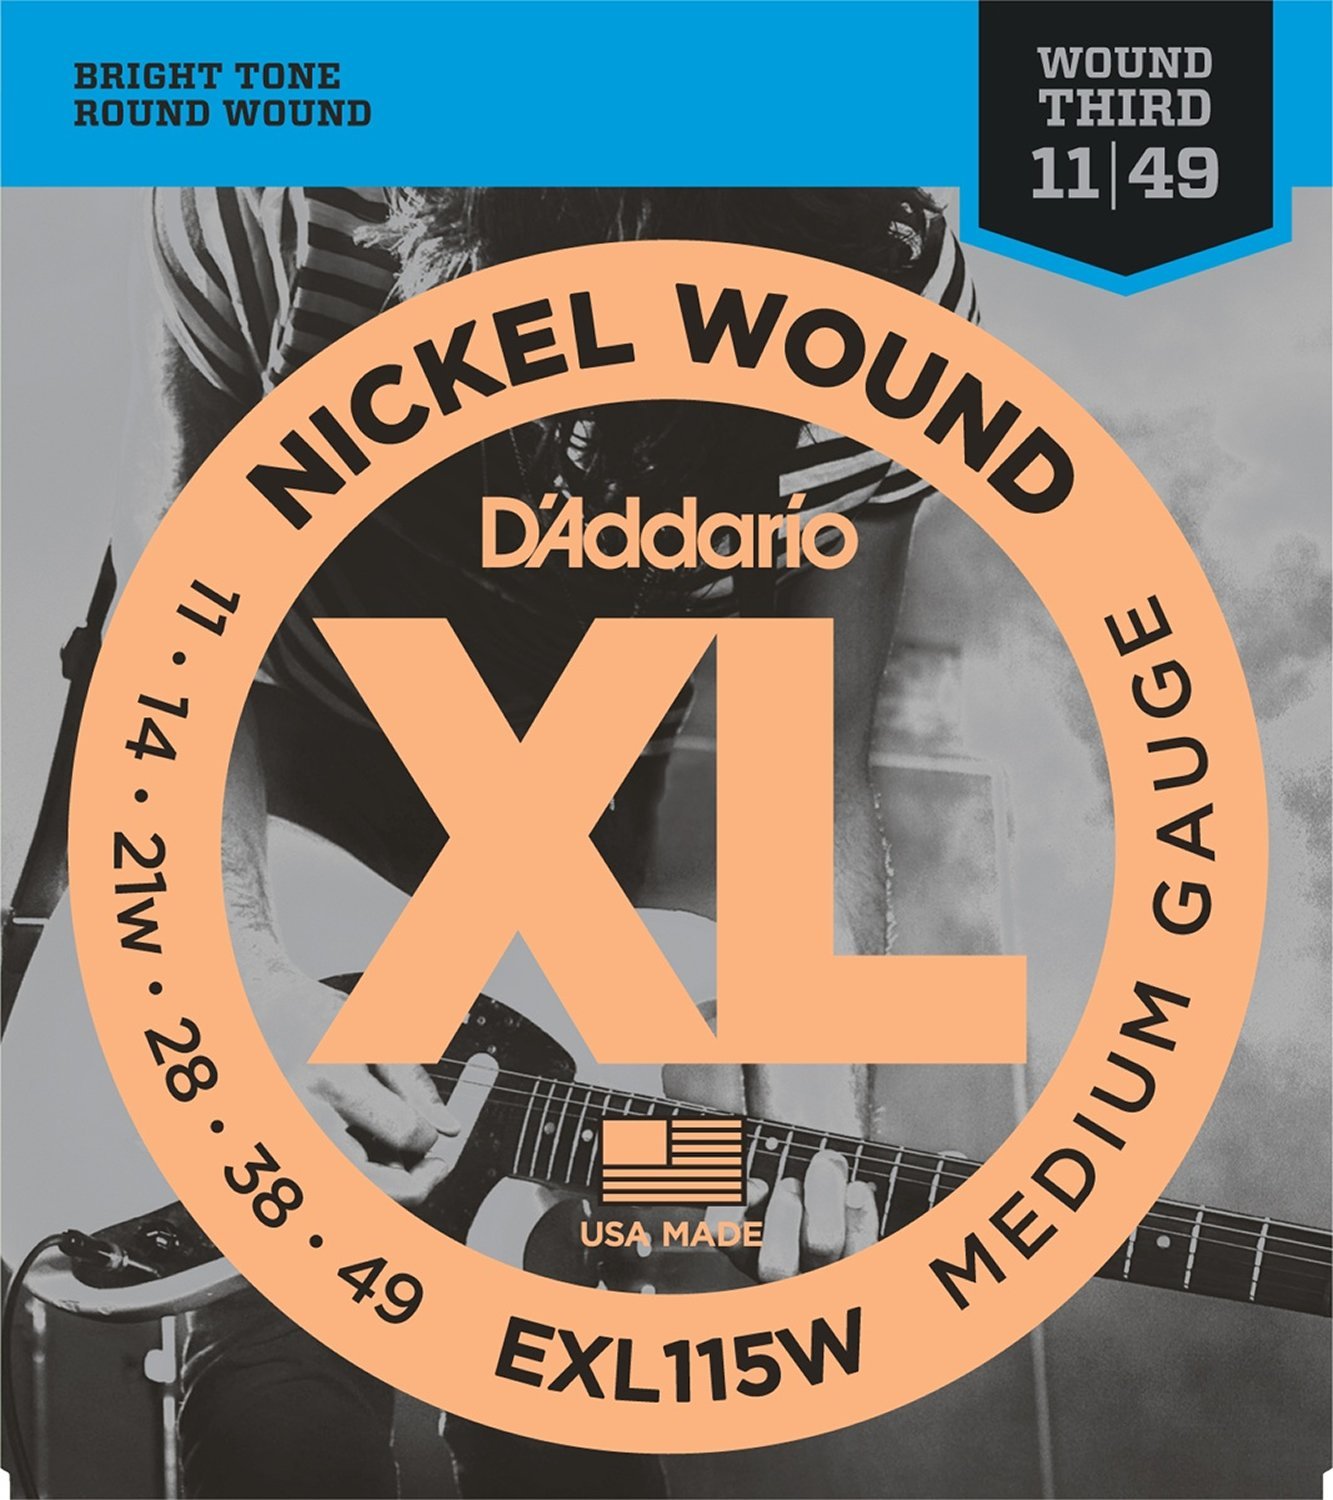 D’Addario exl115w Set Blues/Jazz Rock Wound 3rd 11-49 Single Set